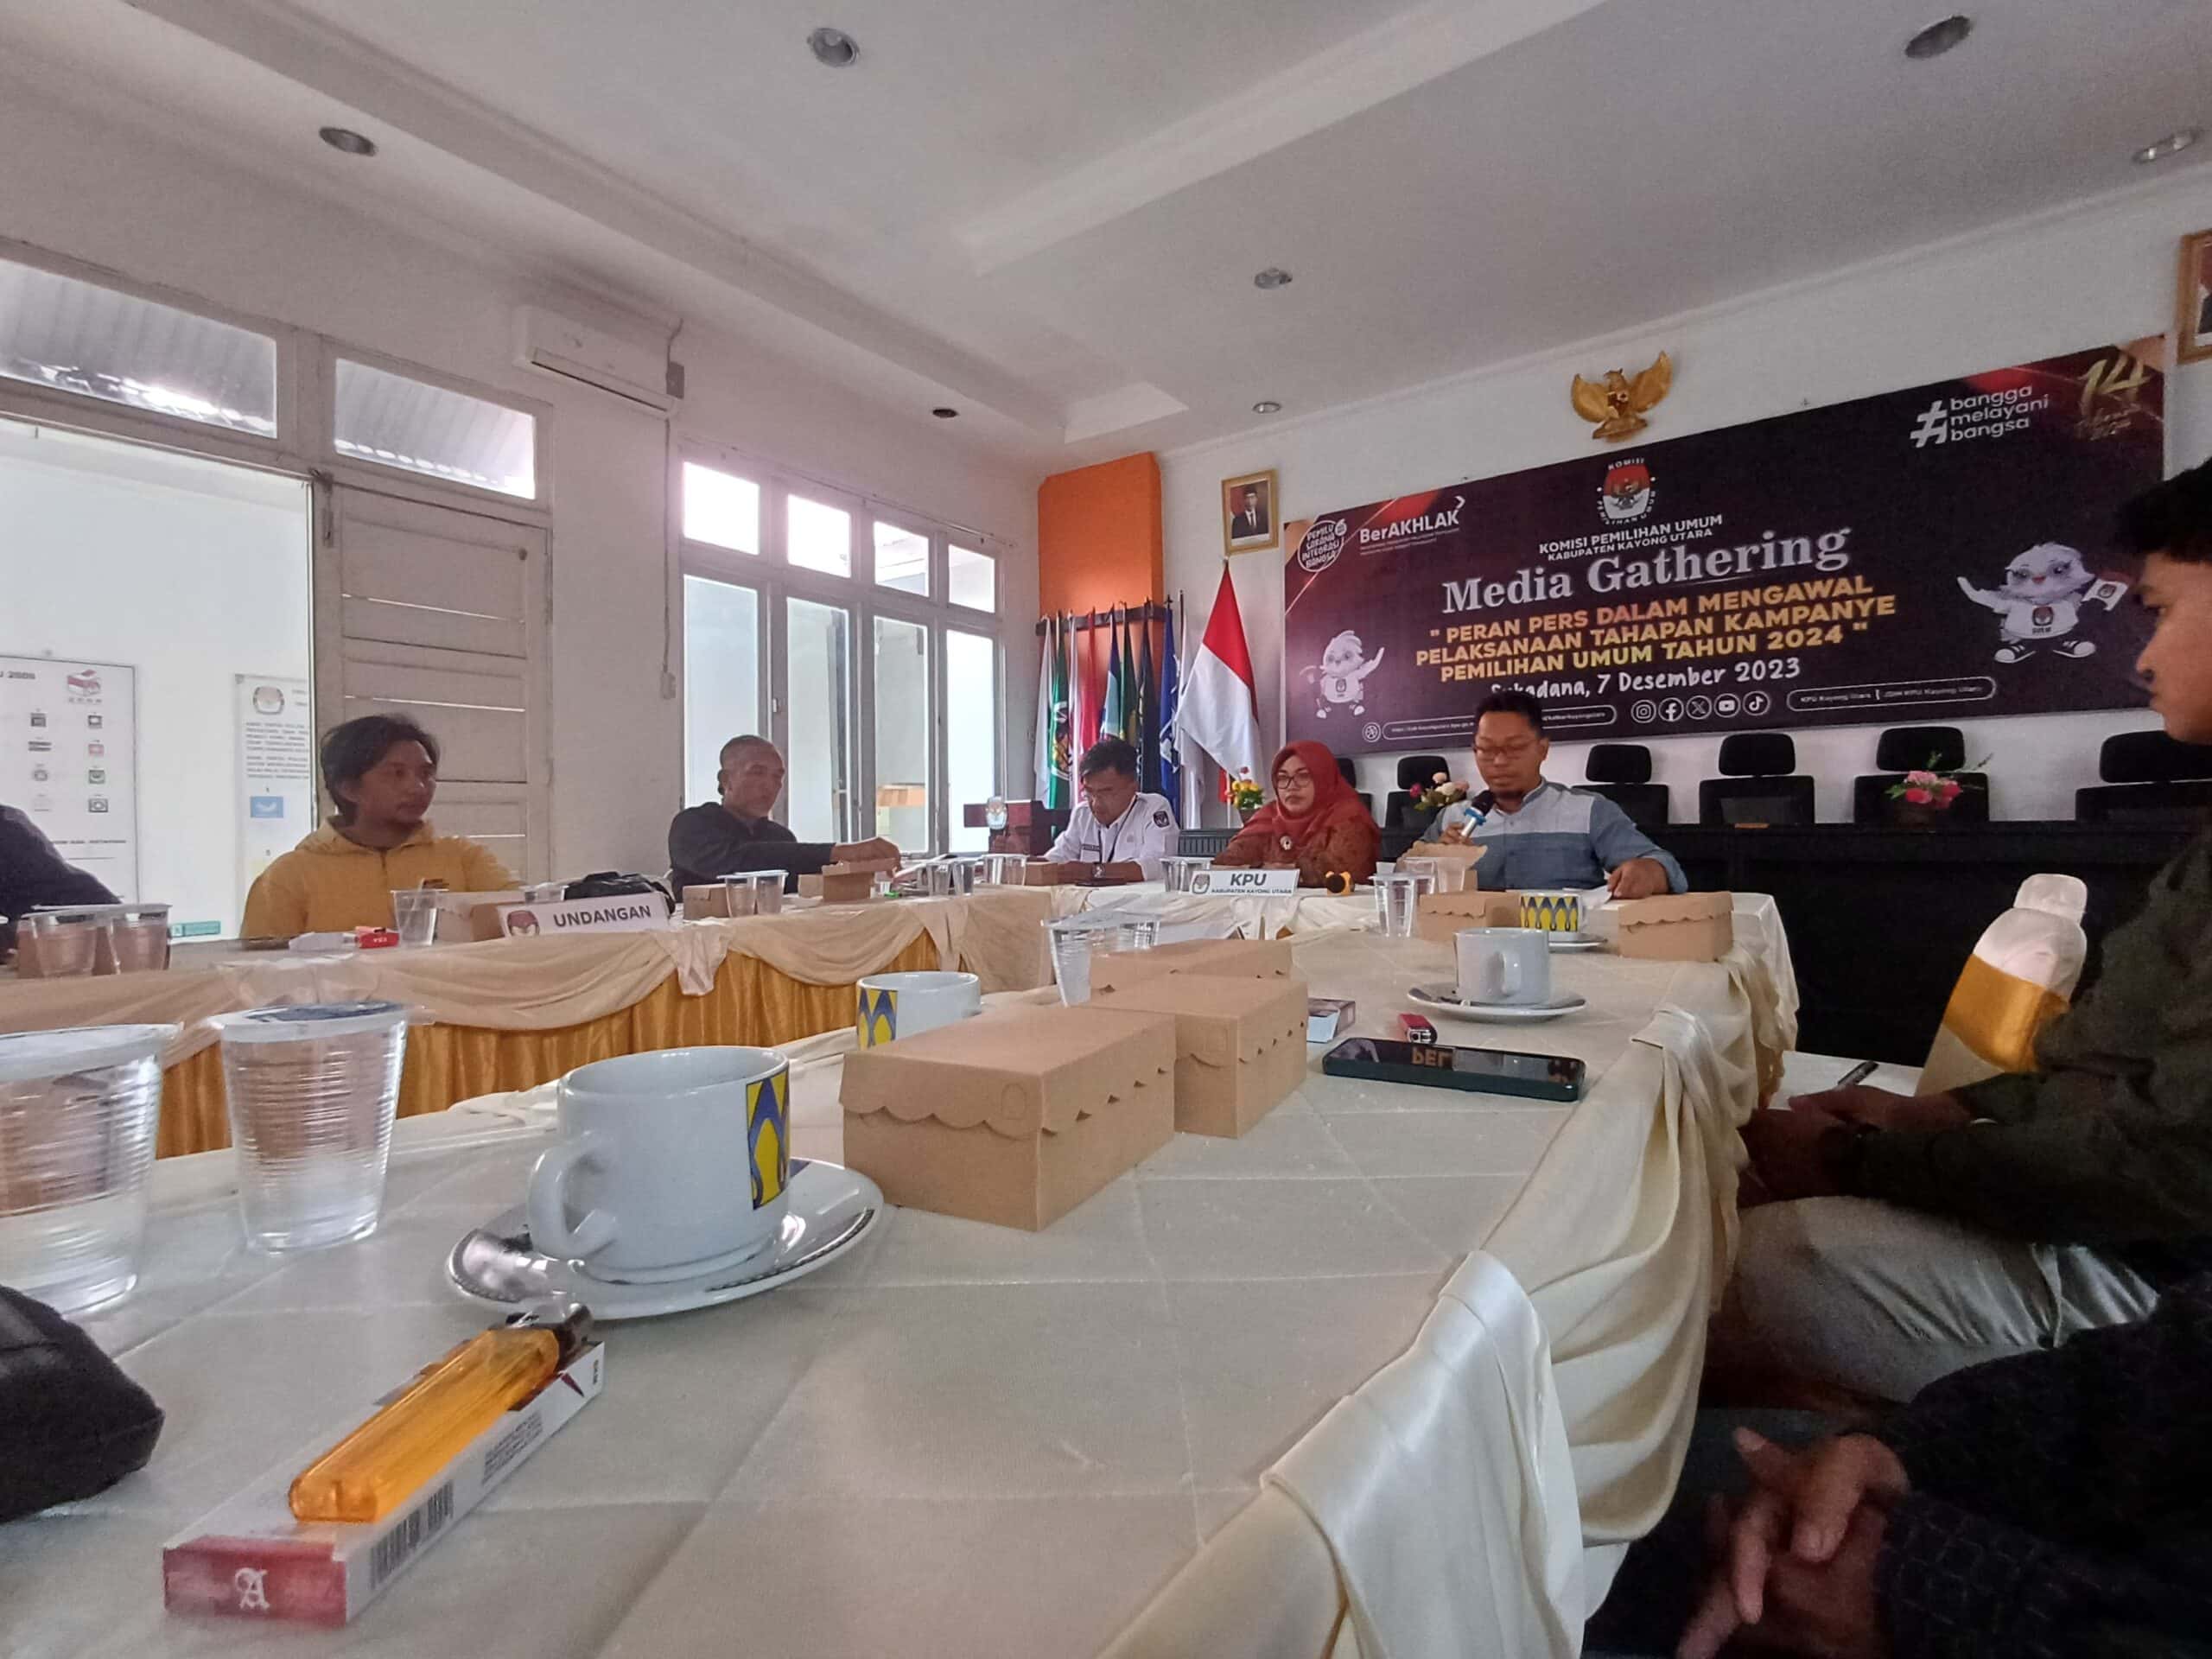 Komisi Pemilihan Umum (KPU) Kayong Utara gelar media gathering dengan Jurnalis Kayong Utara, di ruang rapat KPU Kayong Utara, Kamis, (07/12/2023). (Foto: Santo)